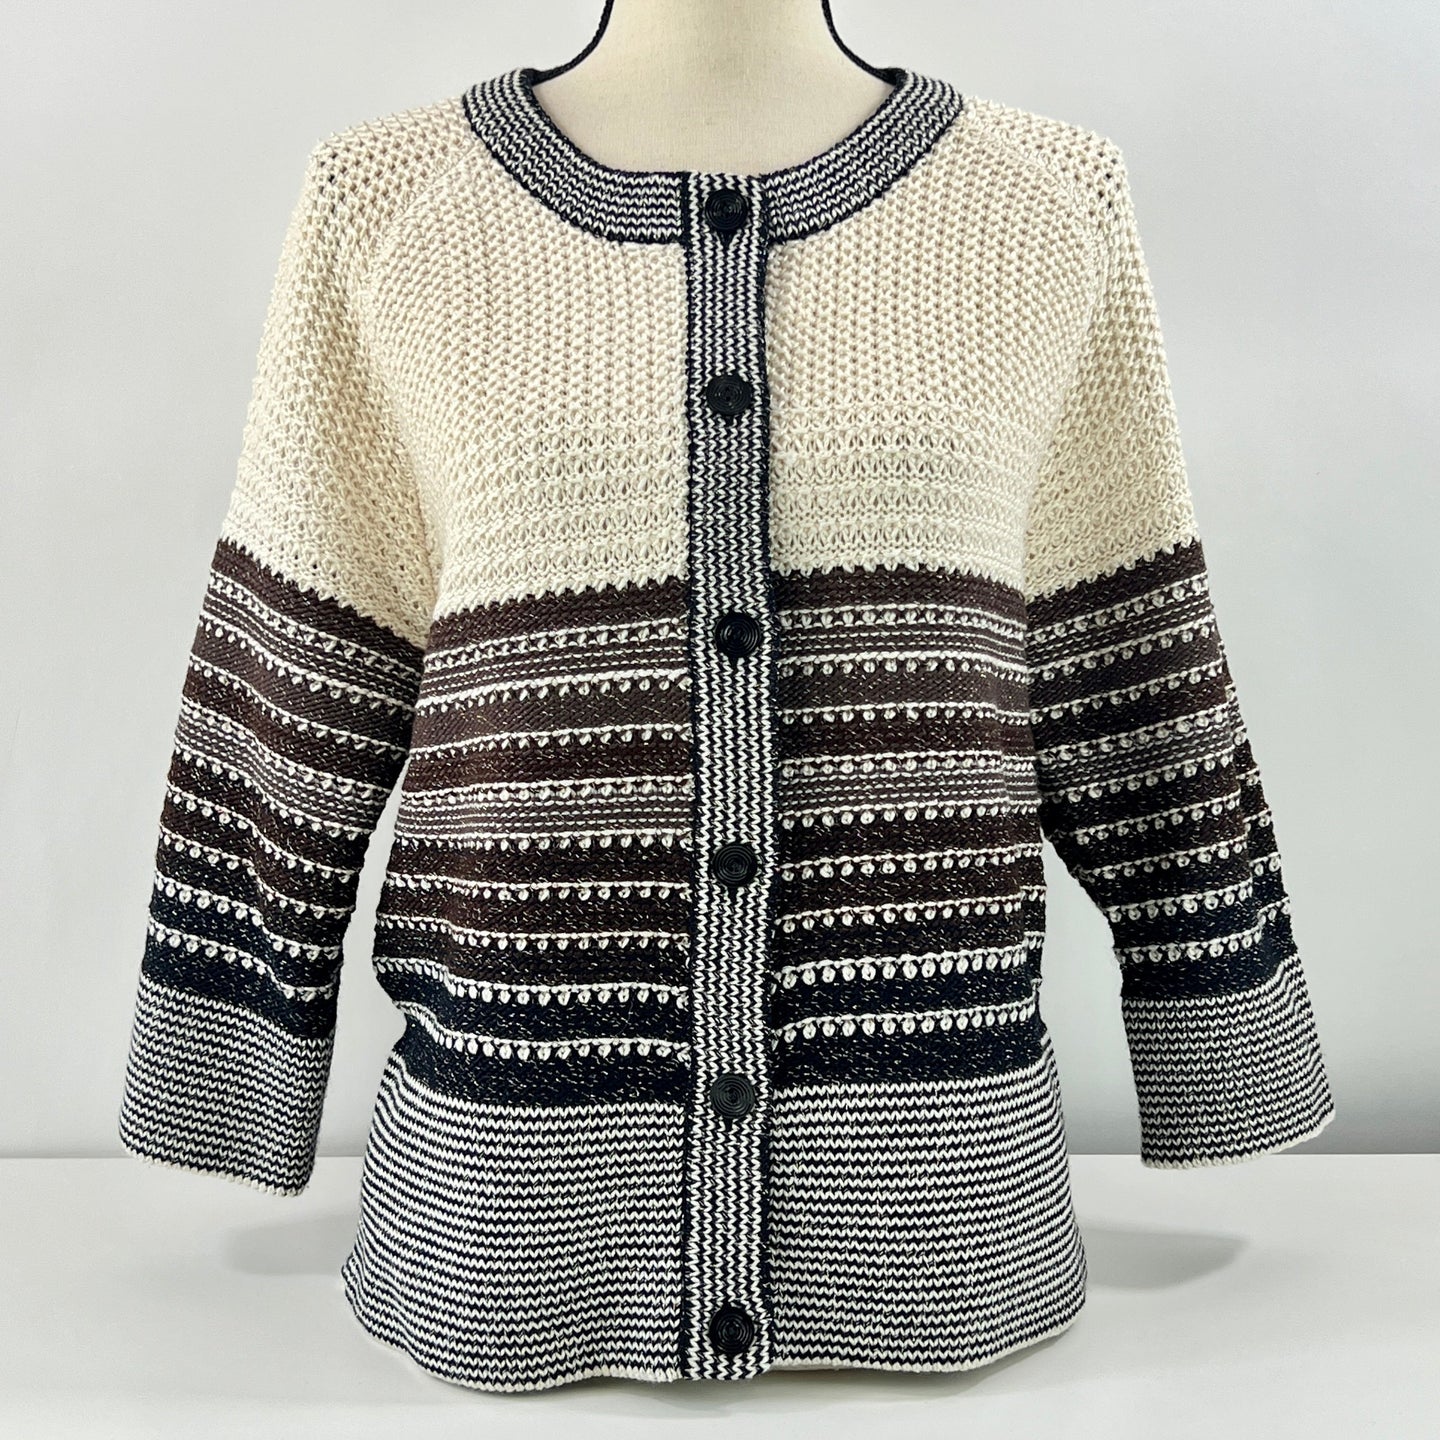 St John Metallic Knit Wool Cardigan Sweater Size 10